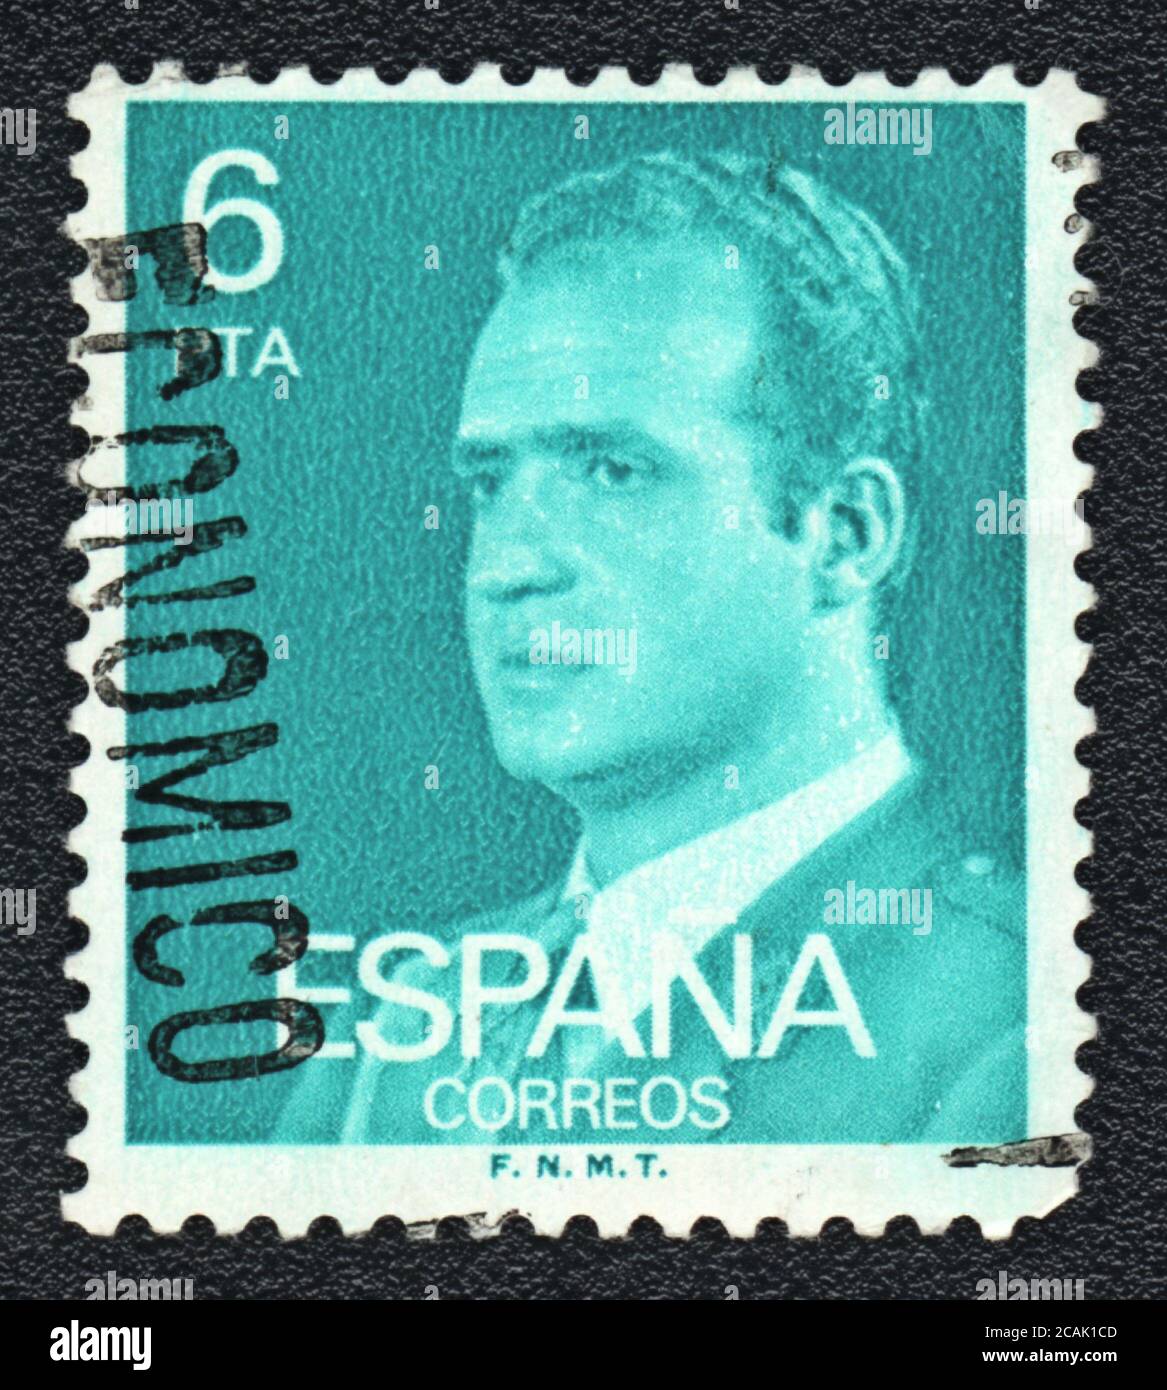 Postage stamp. Portrait of King Juan Carlos I of Spain, Spain, 1976. Stock Photo